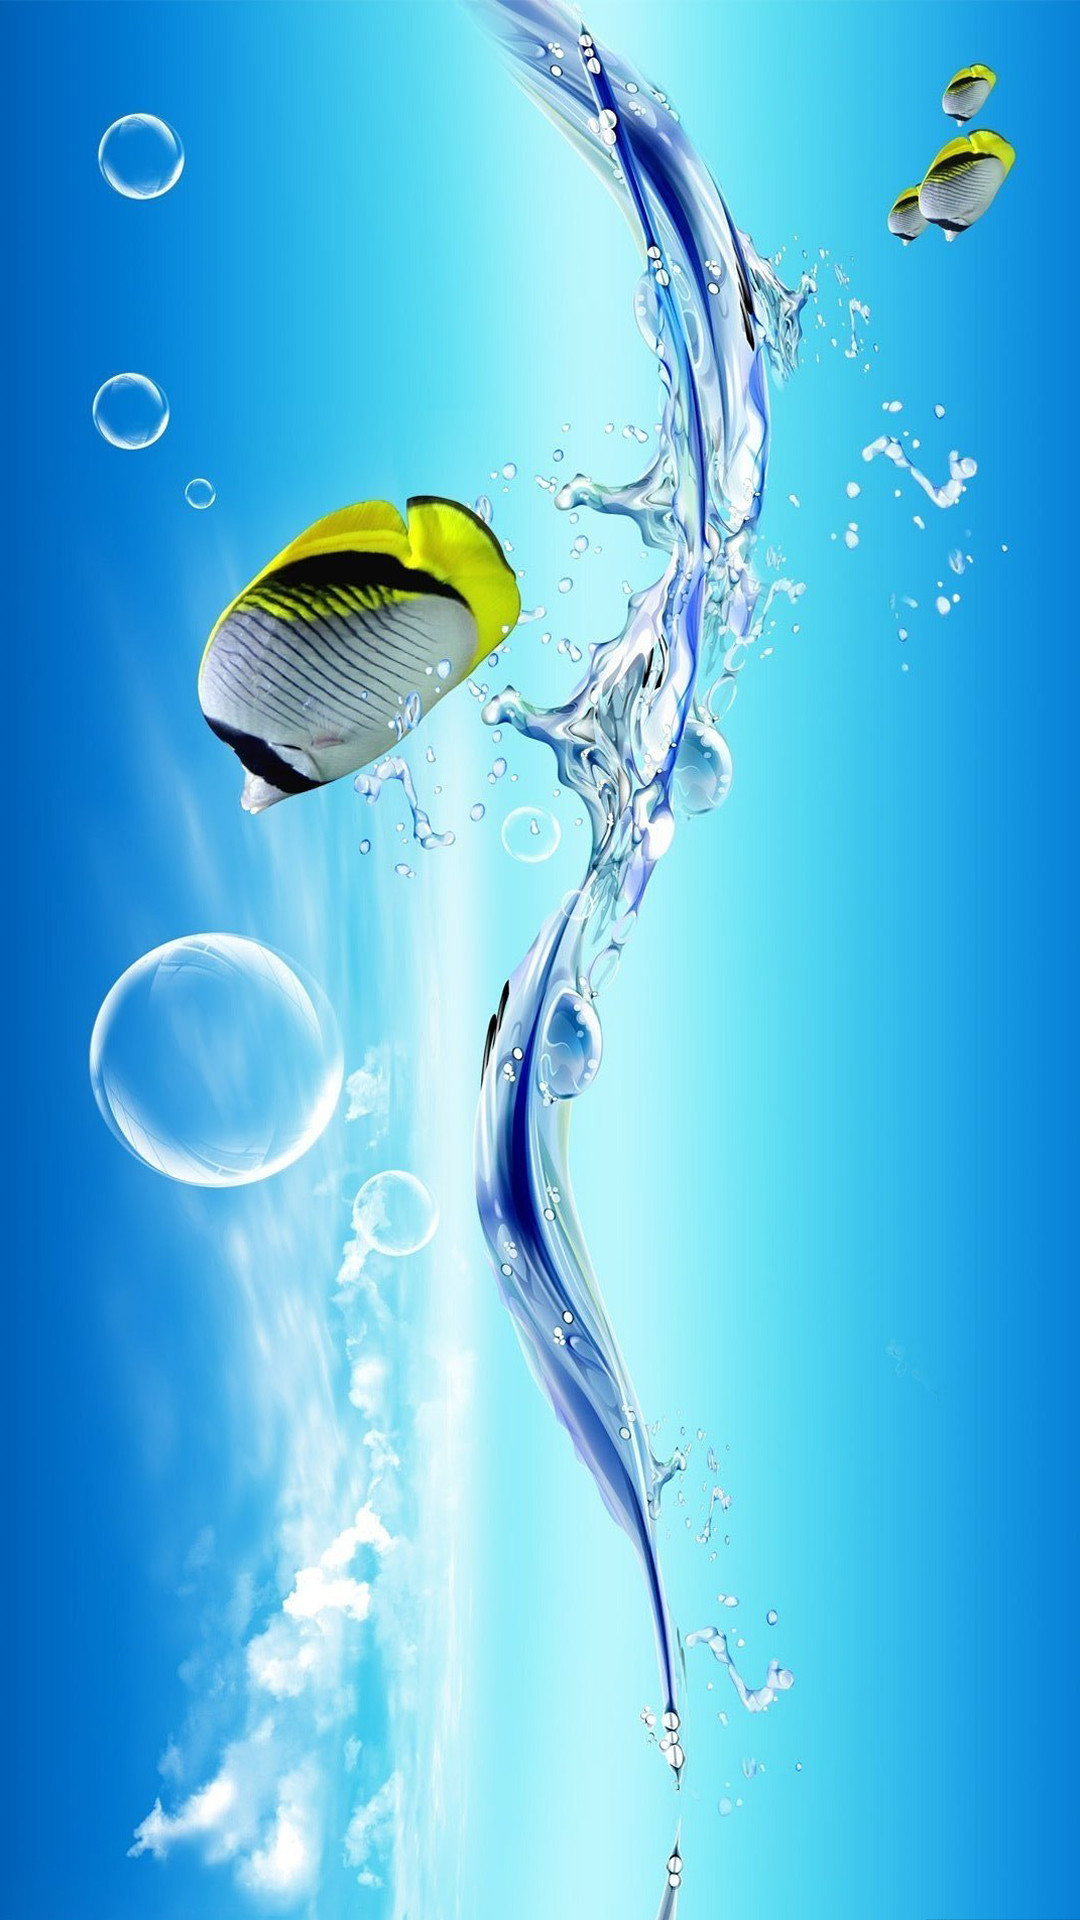 1080x1920 Clownfish iPhone 6 plus wallpaper - ocean, fish, water, bubble